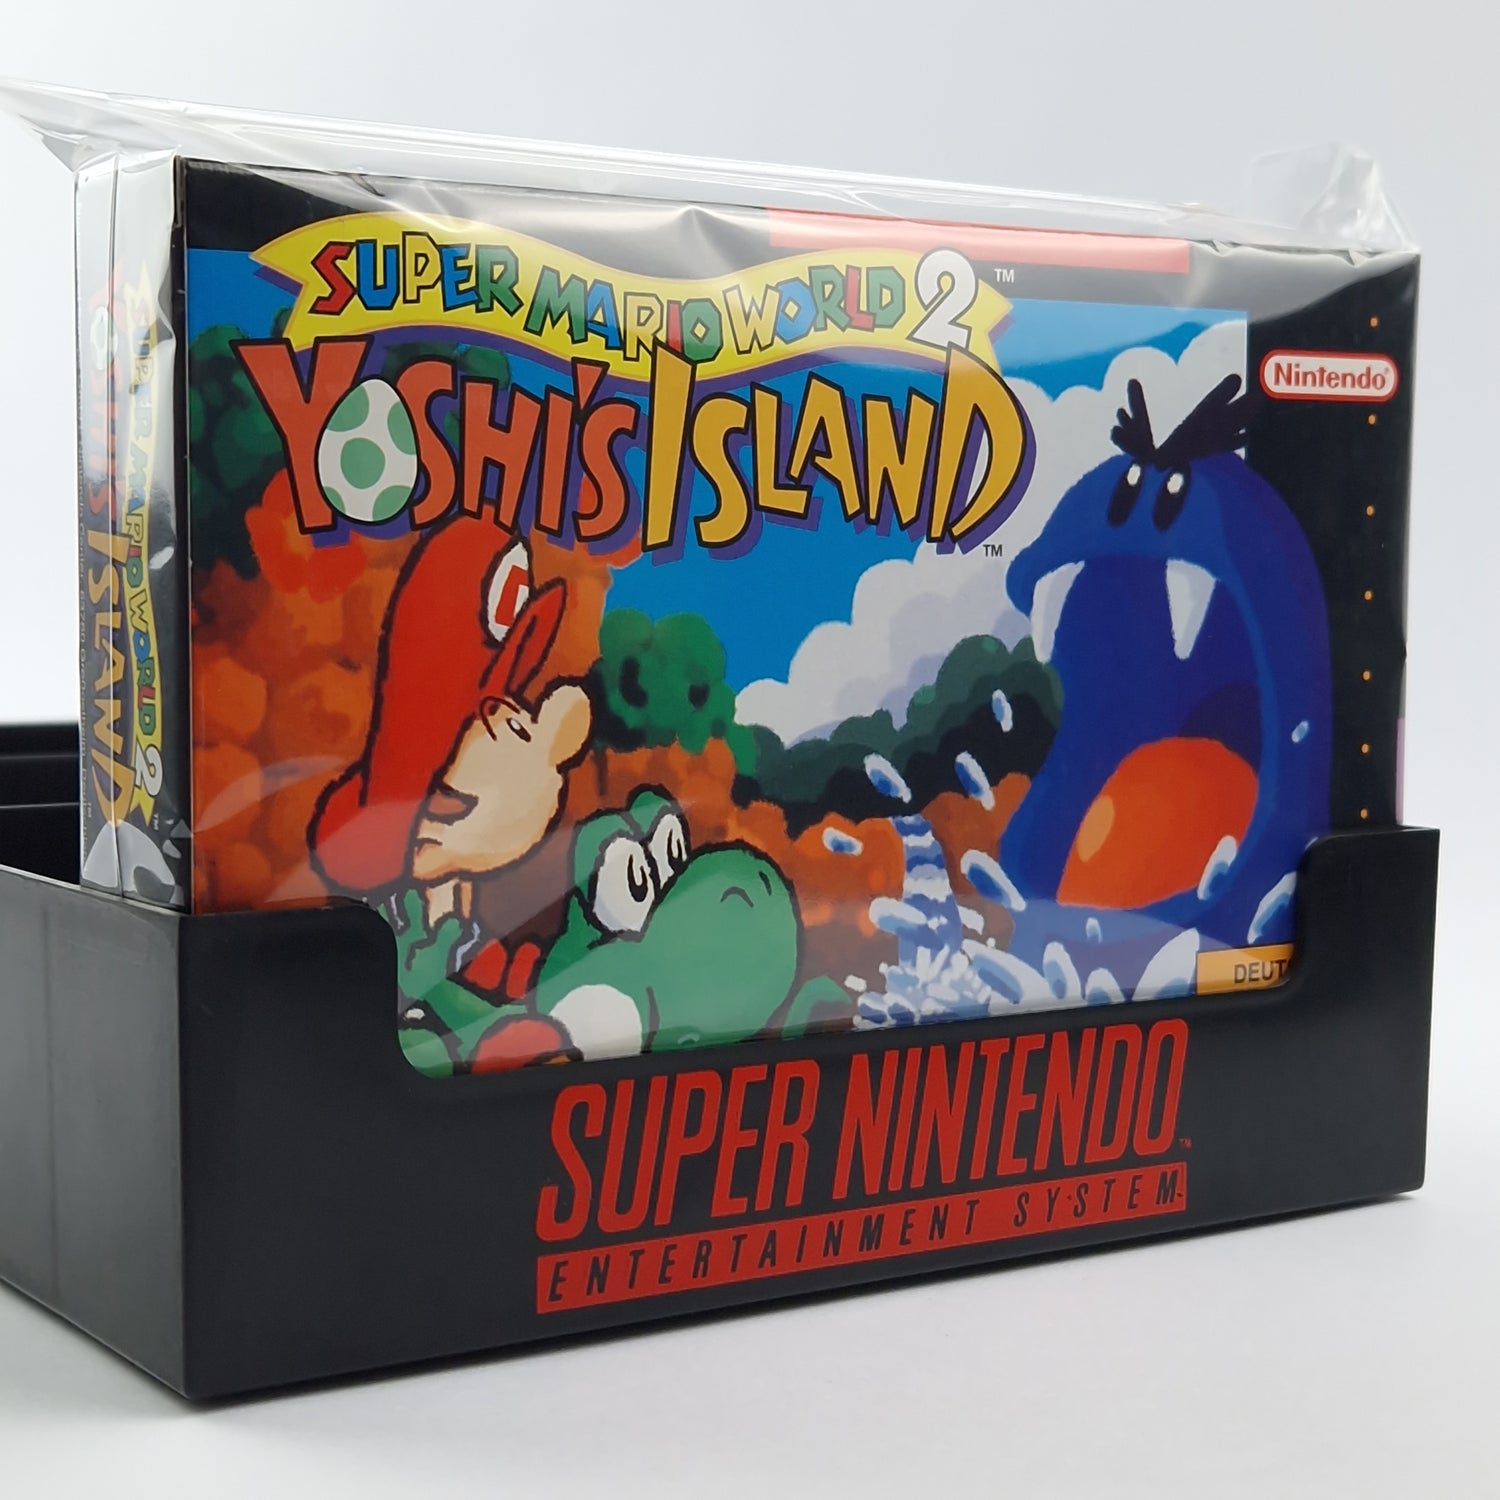 Super Nintendo Spiel : Super Mario World 2 Yoshis Island - SNES OVP PAL NOE